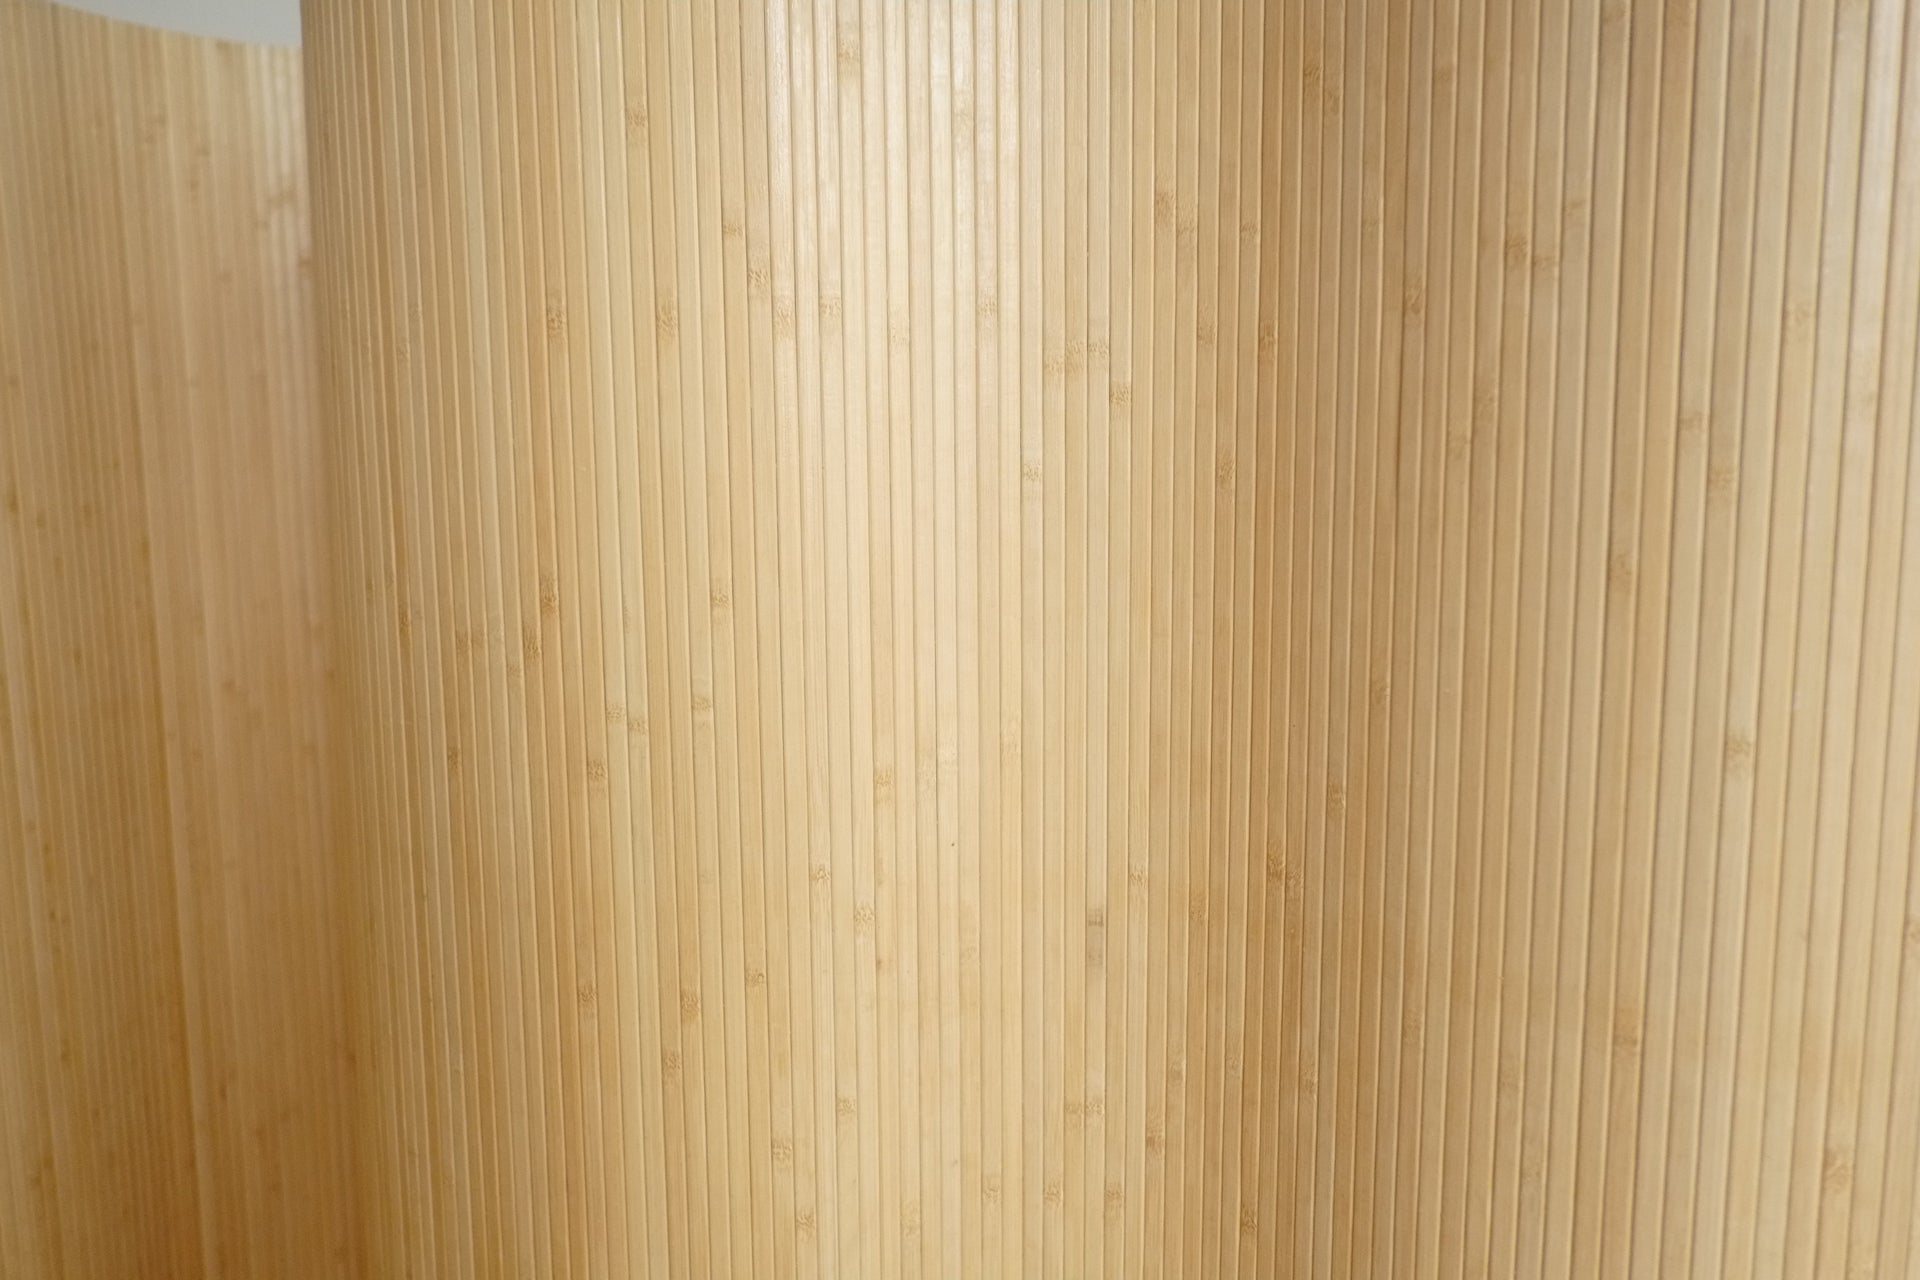 Rent: Bamboo Room Divider in HONEY